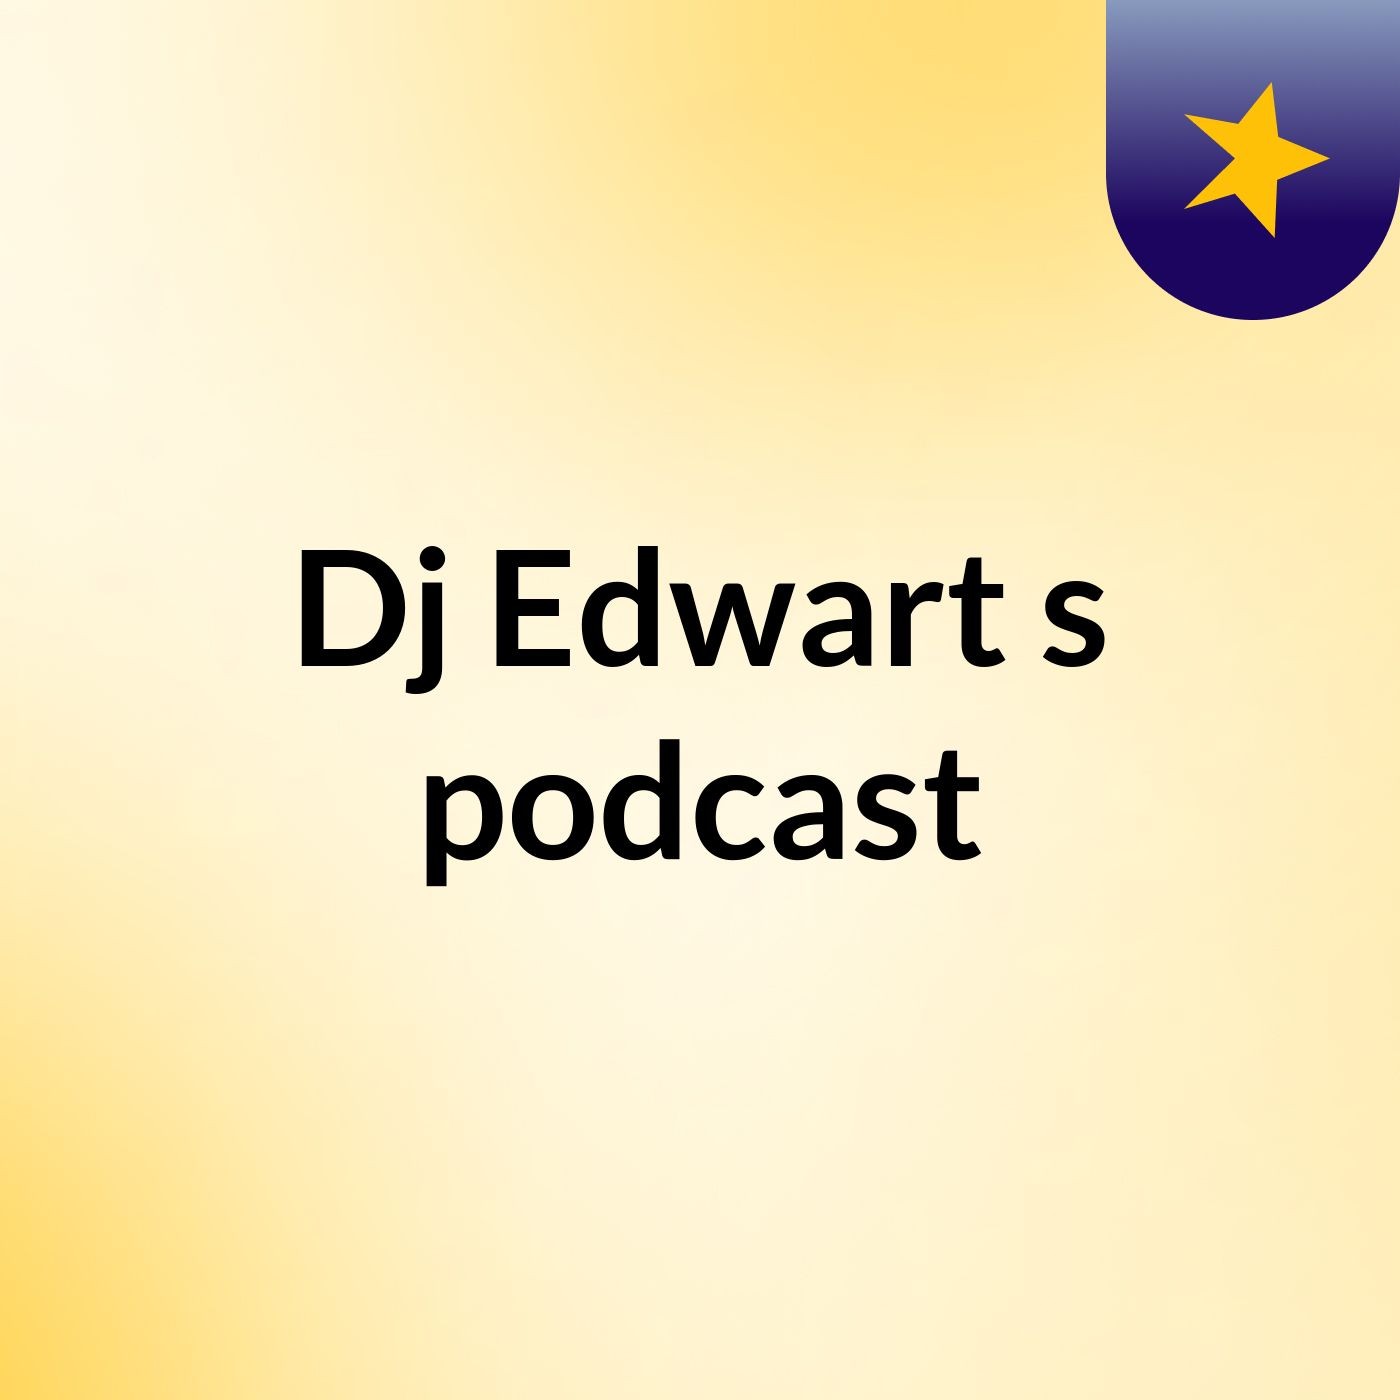 Dj Edwart's podcast